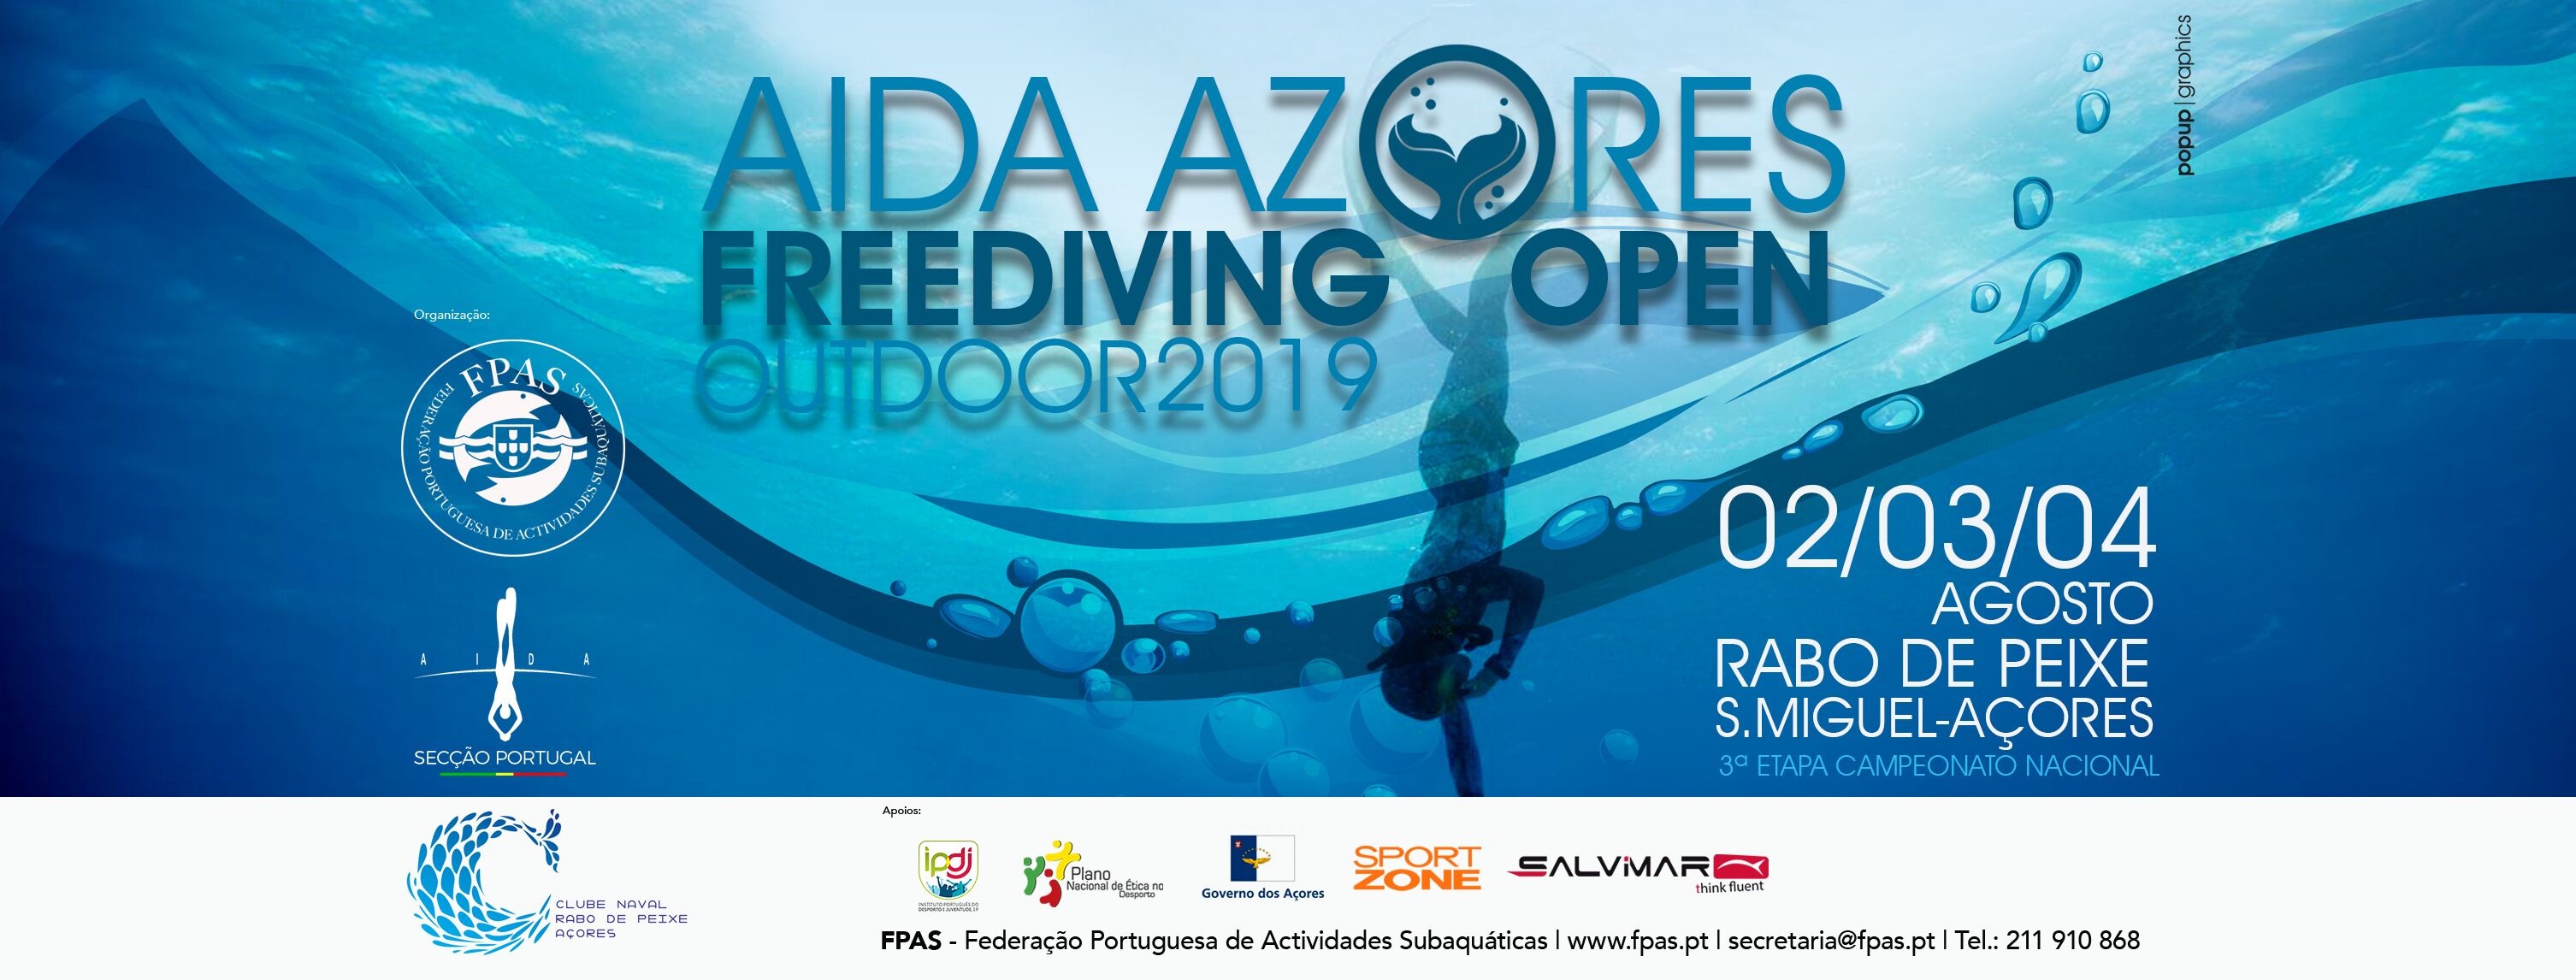 AIDA Azores Freediving Open 2019